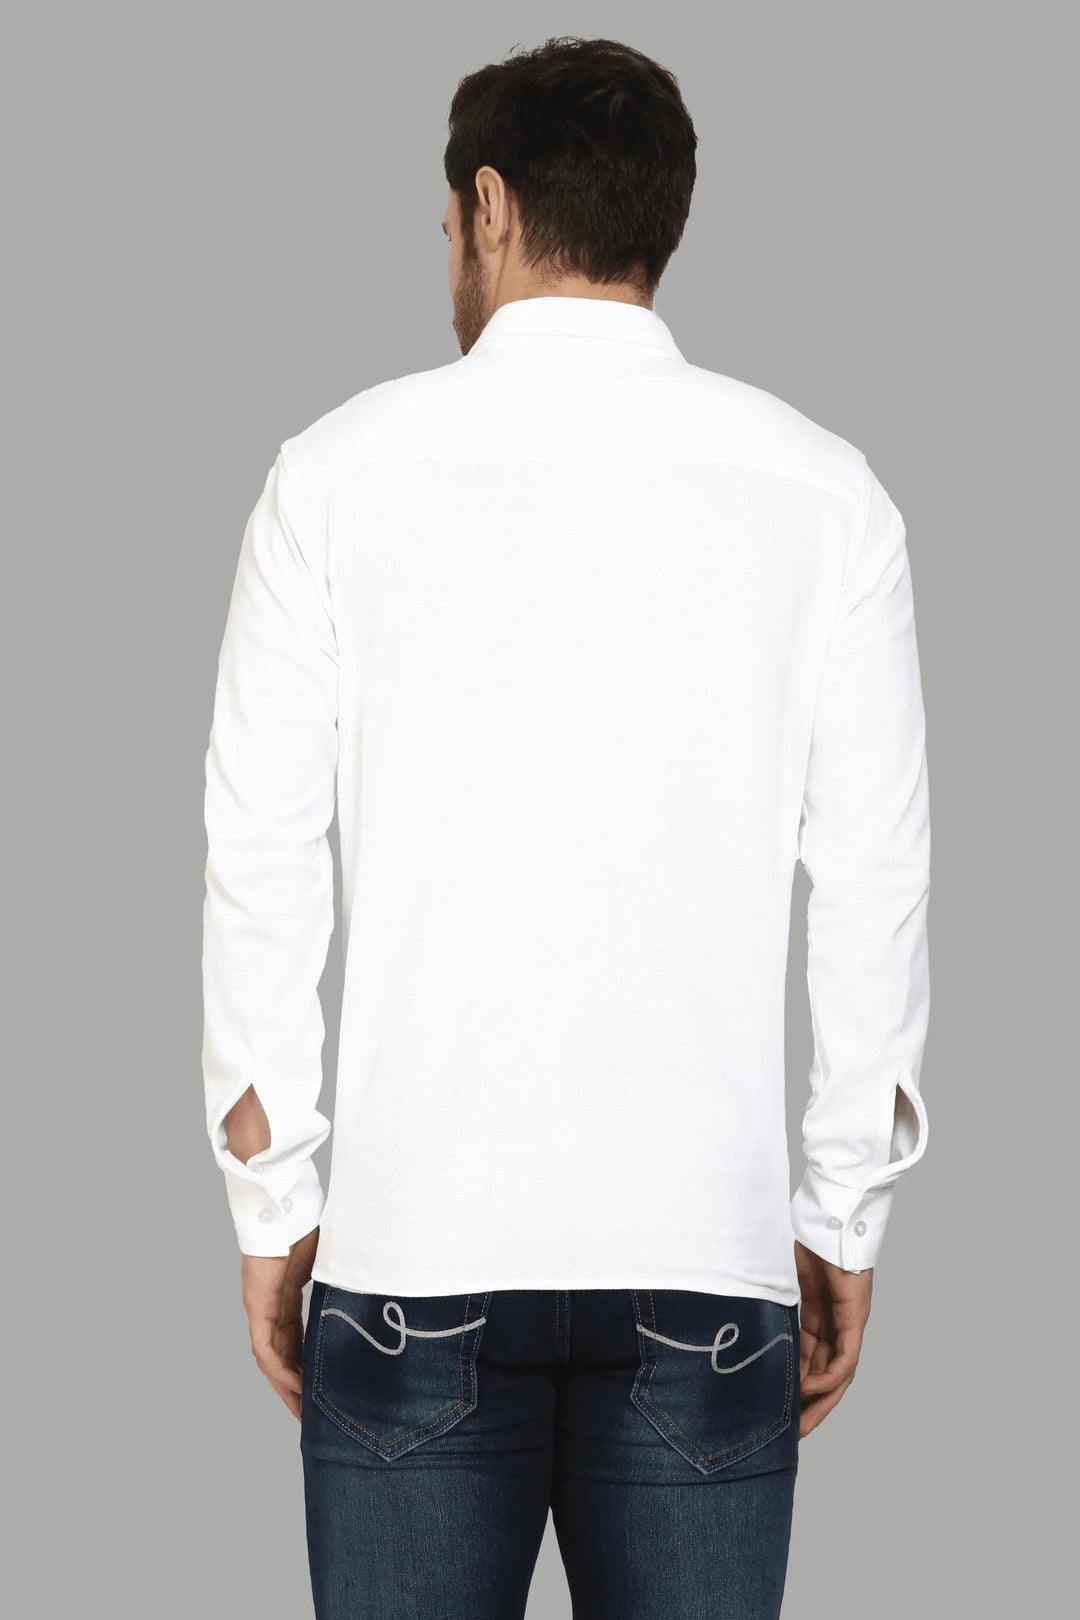 Regular Fit Off White Polo Shirt for Men - Peplos Jeans 